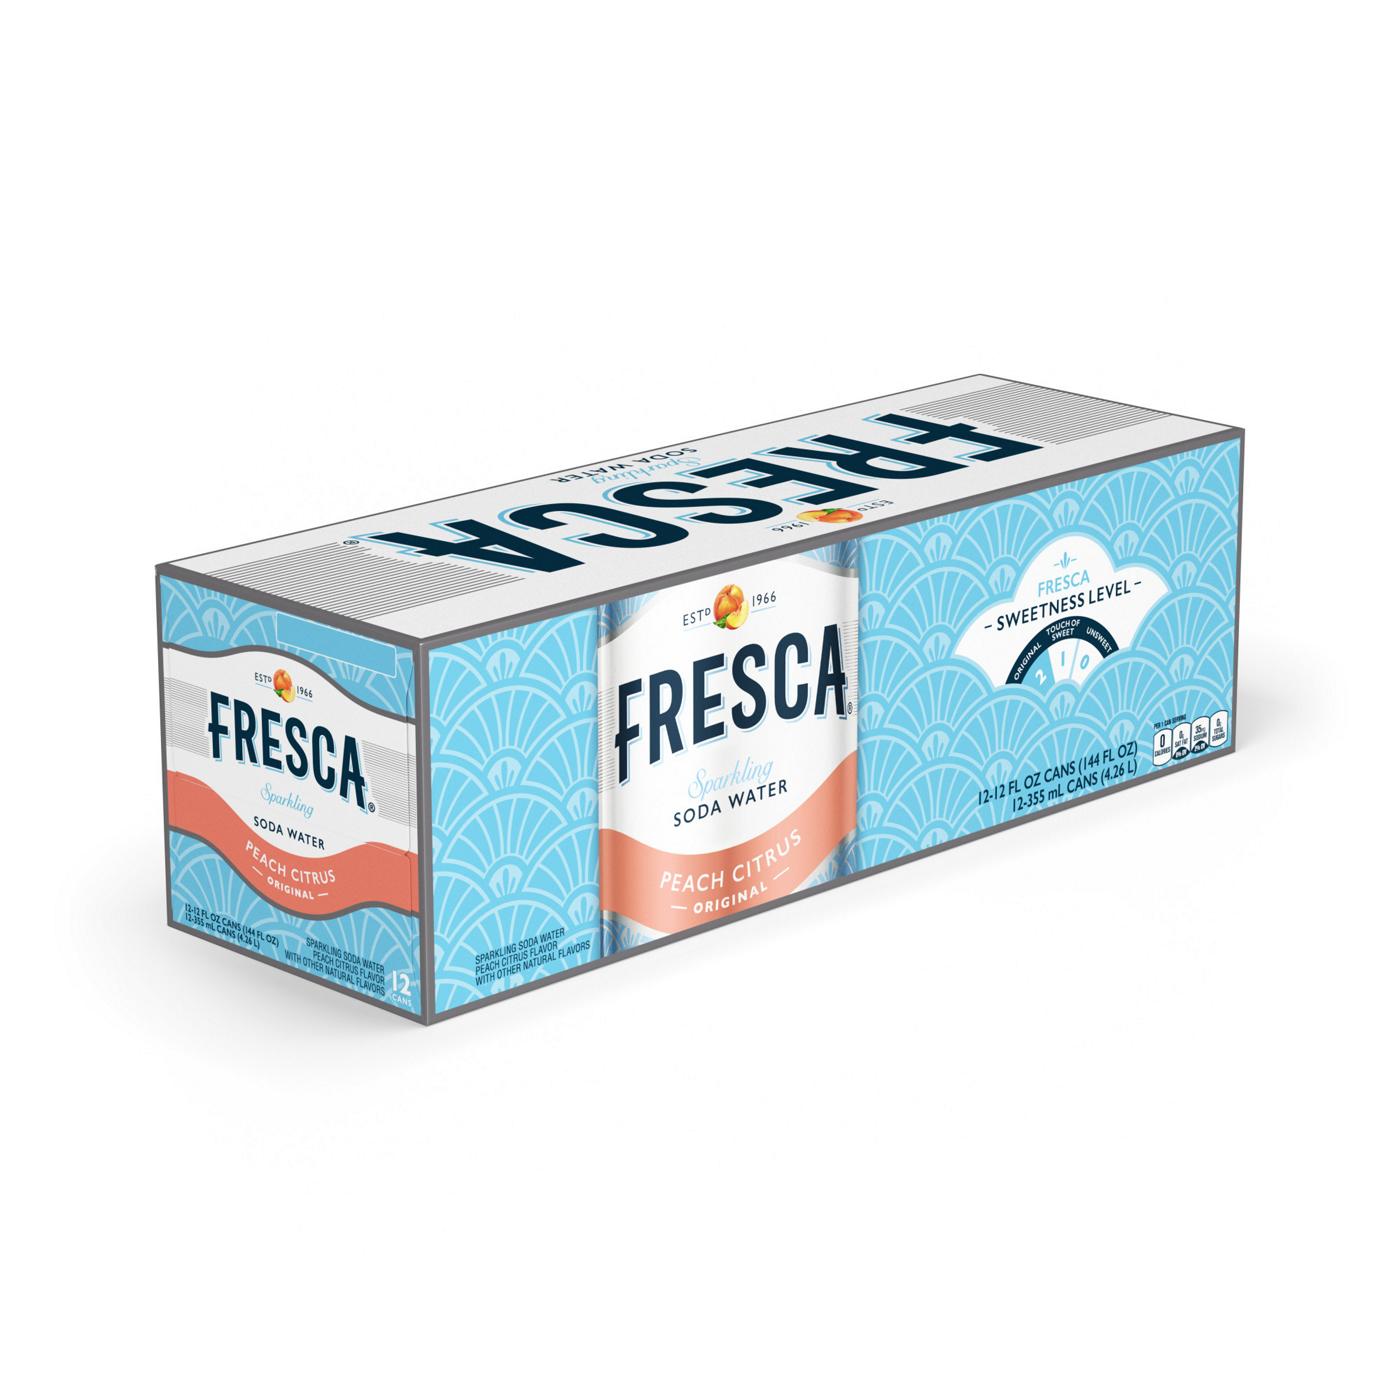 Fresca Peach Citrus Flavored Soda 12 oz Cans; image 2 of 3